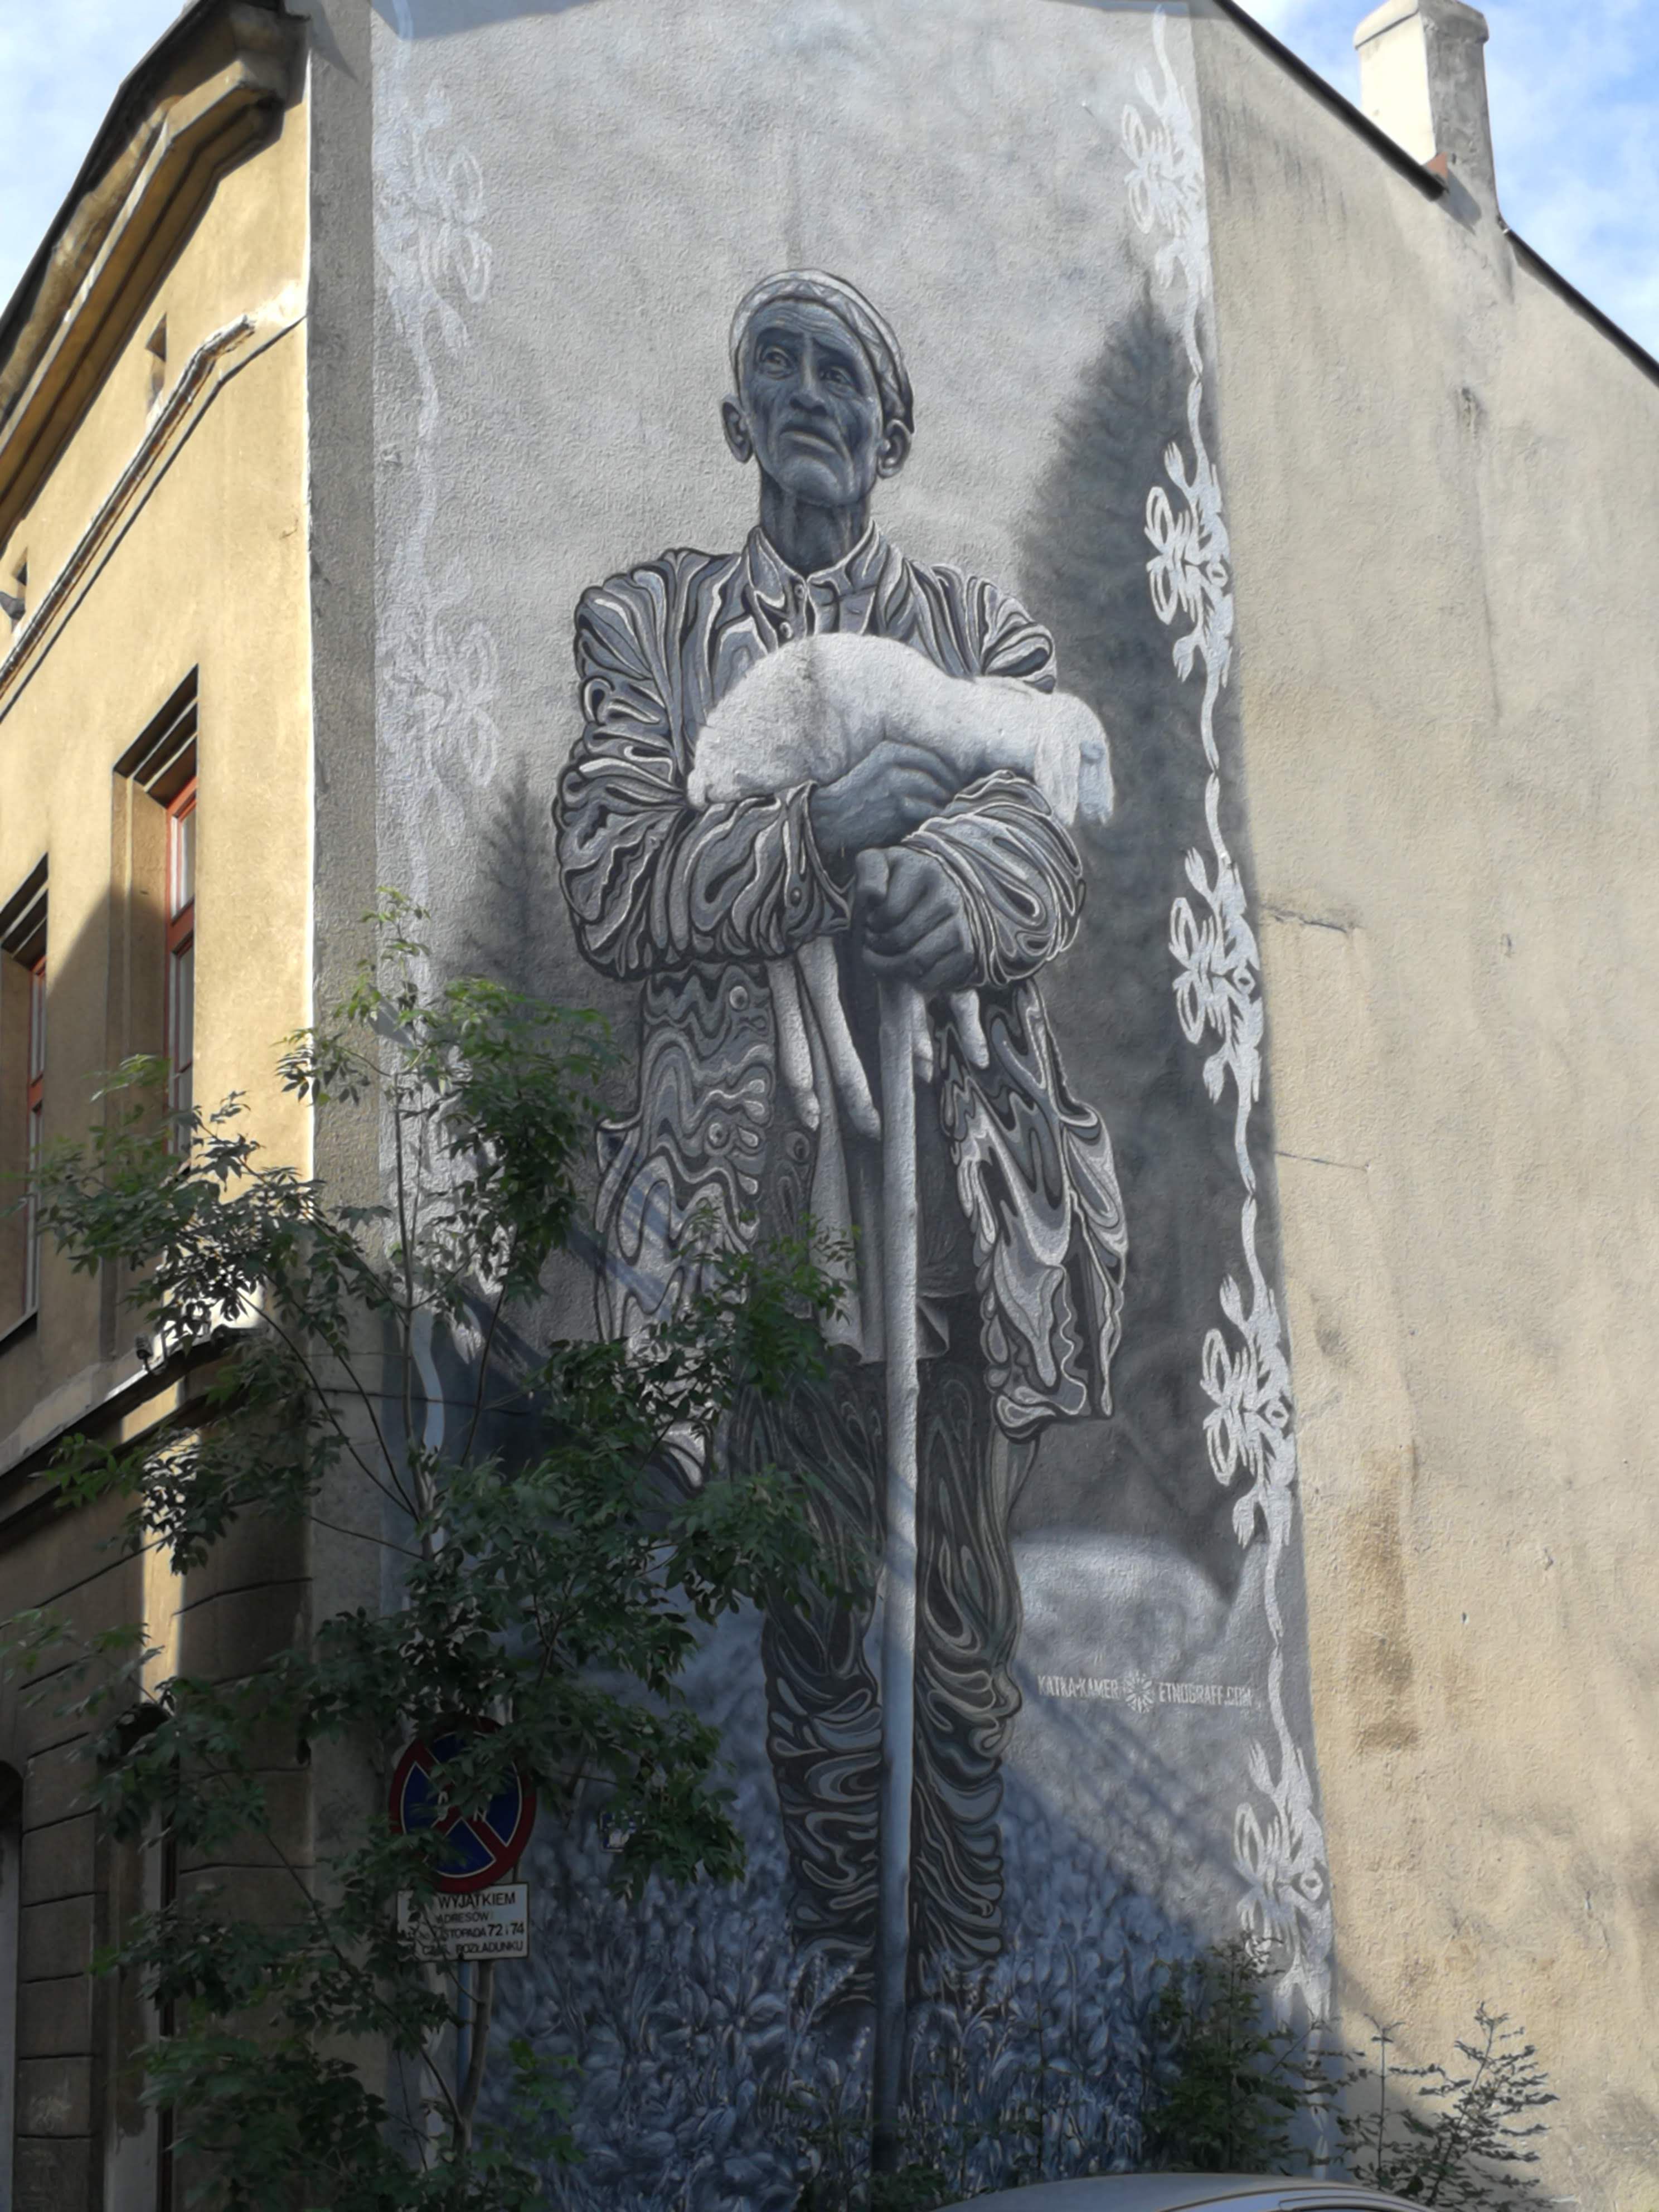 The shepherd with his lamb street art.